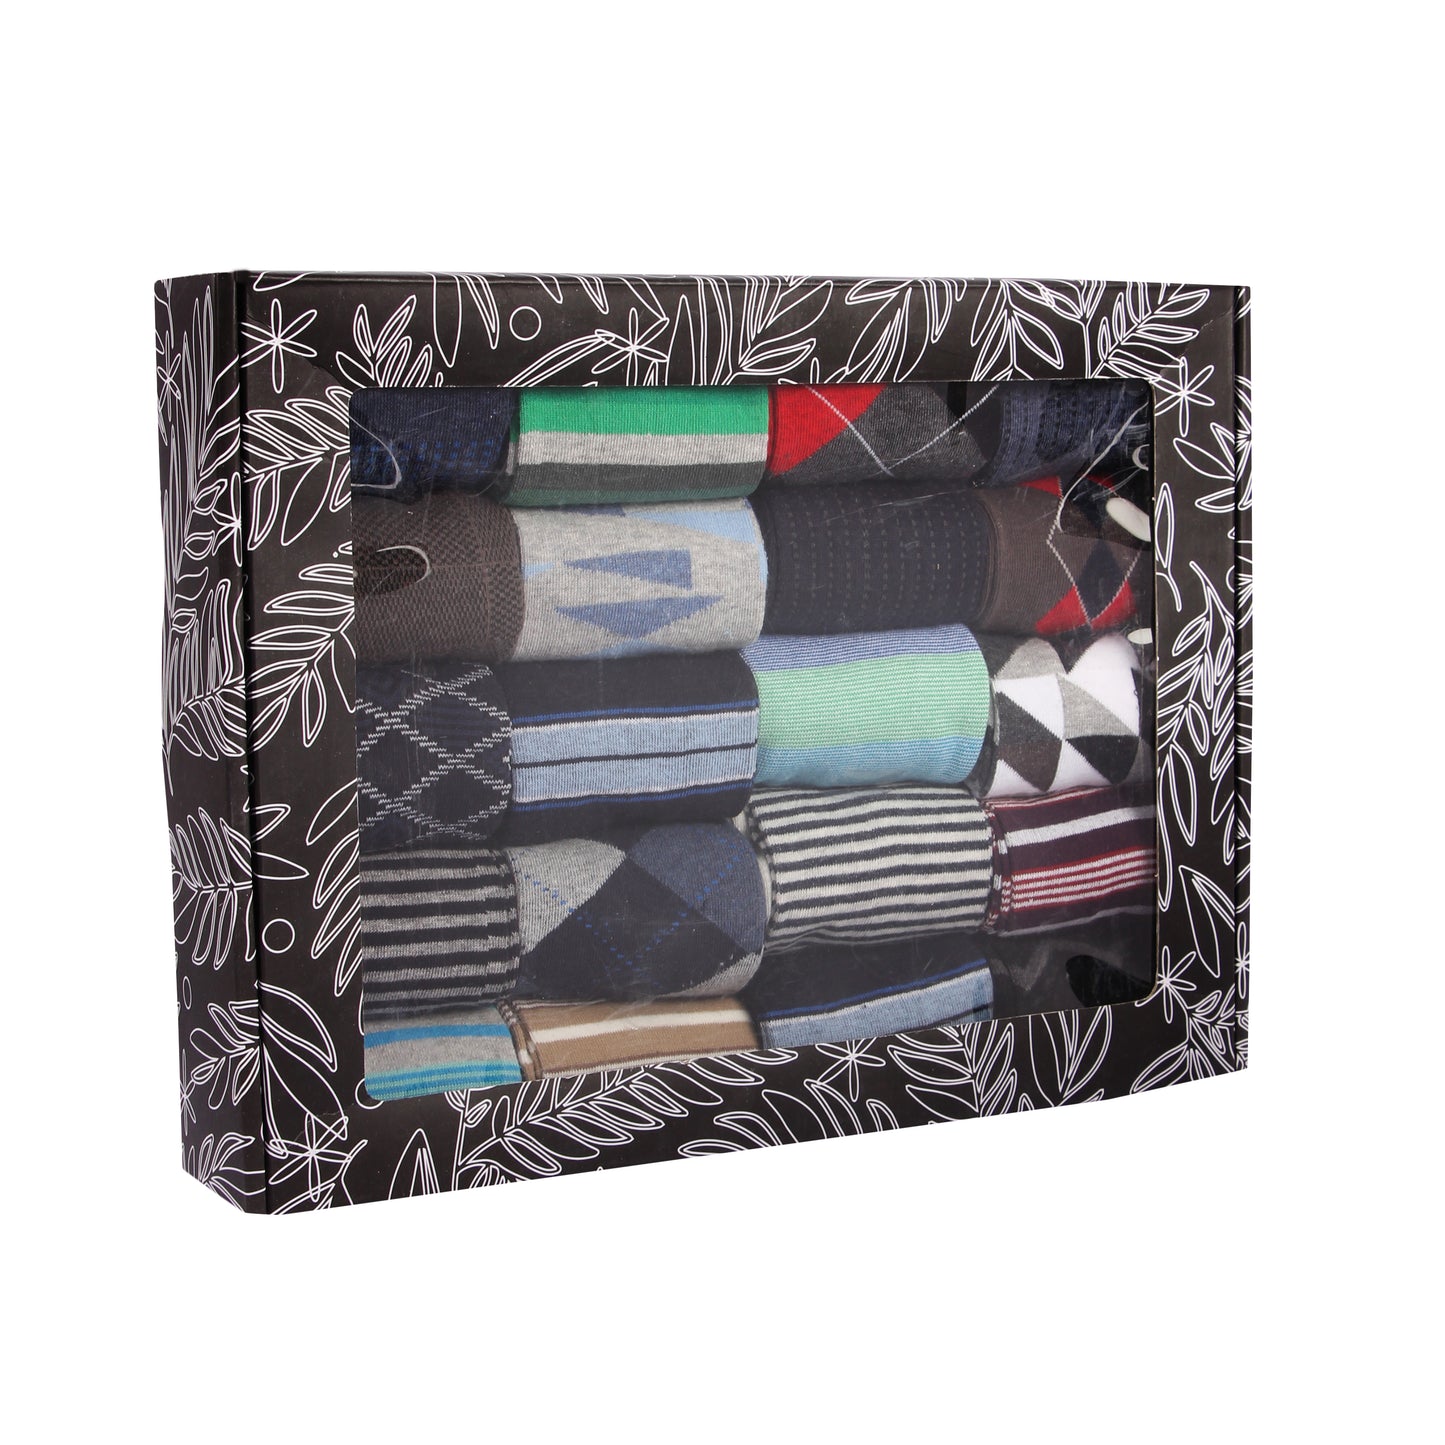 Men's Formal Socks  Assorted -Pack of 20 pairs